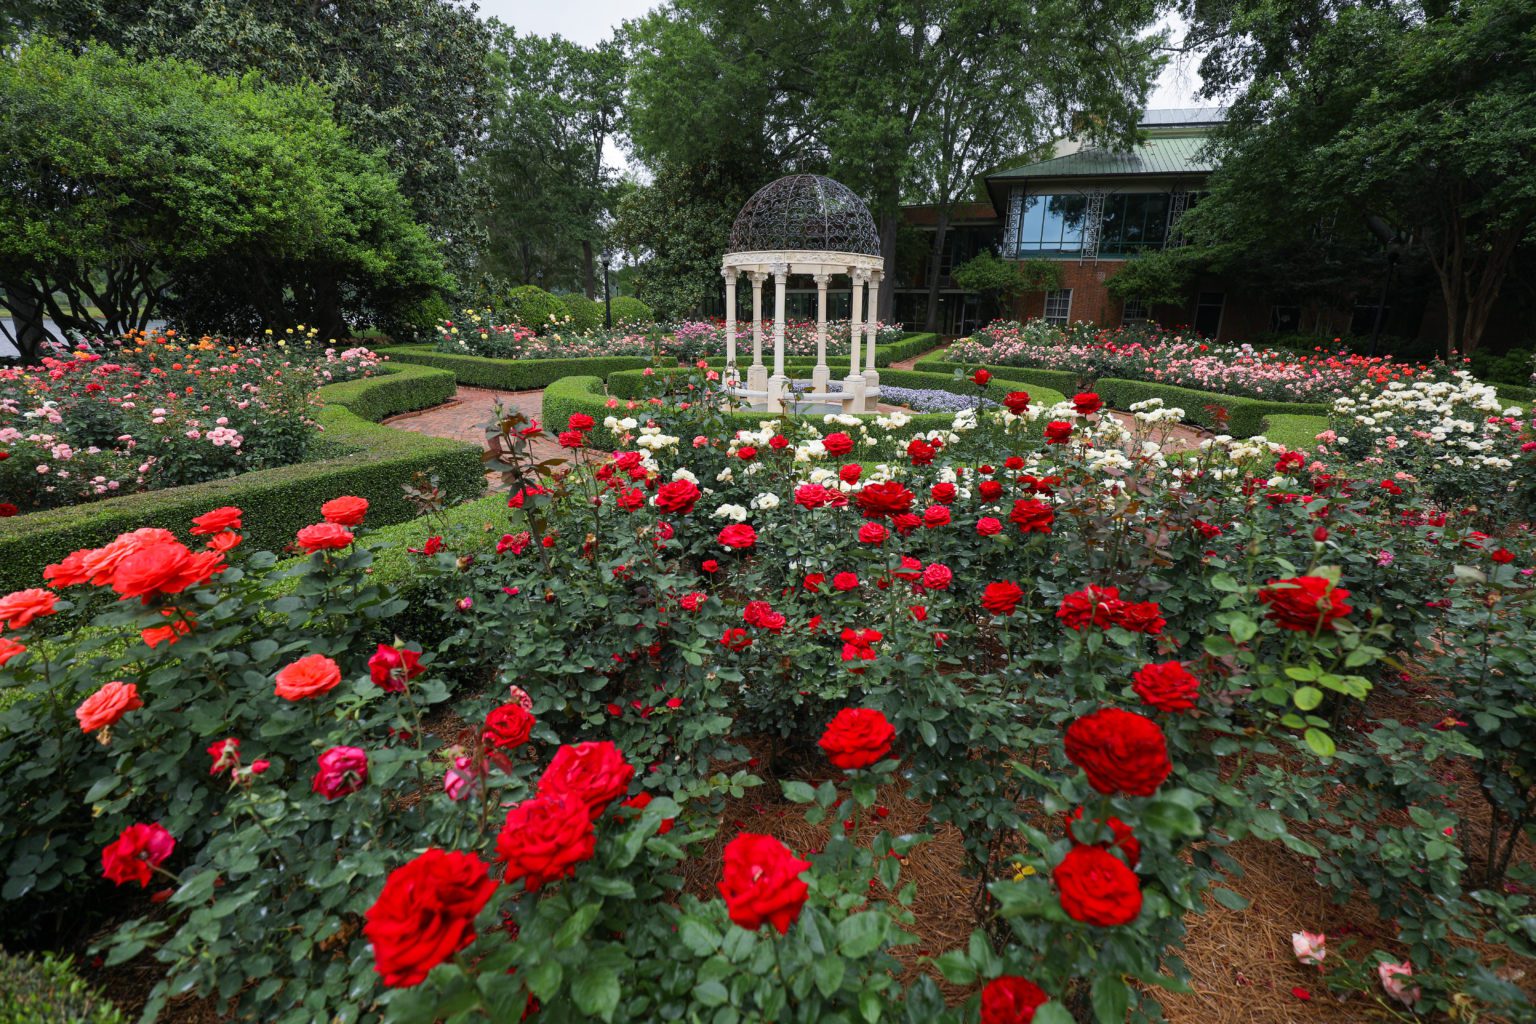 Furman rose garden in spring